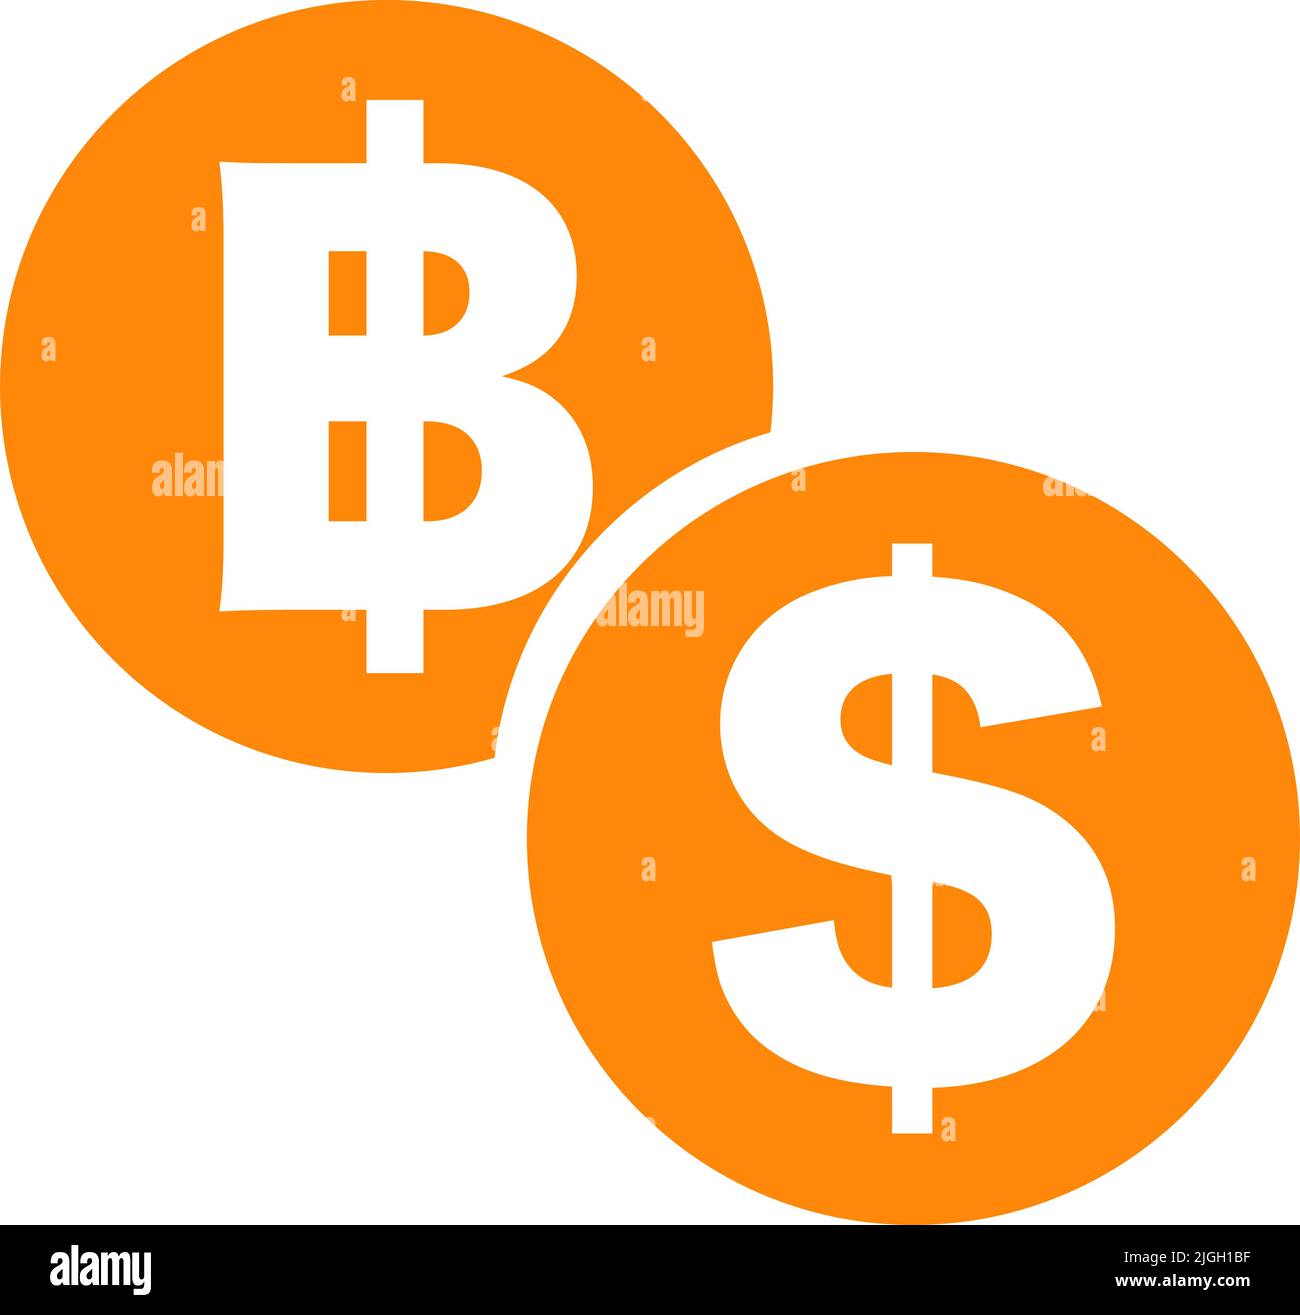 Baht and dollar coin icons. Editable vector. Stock Vector